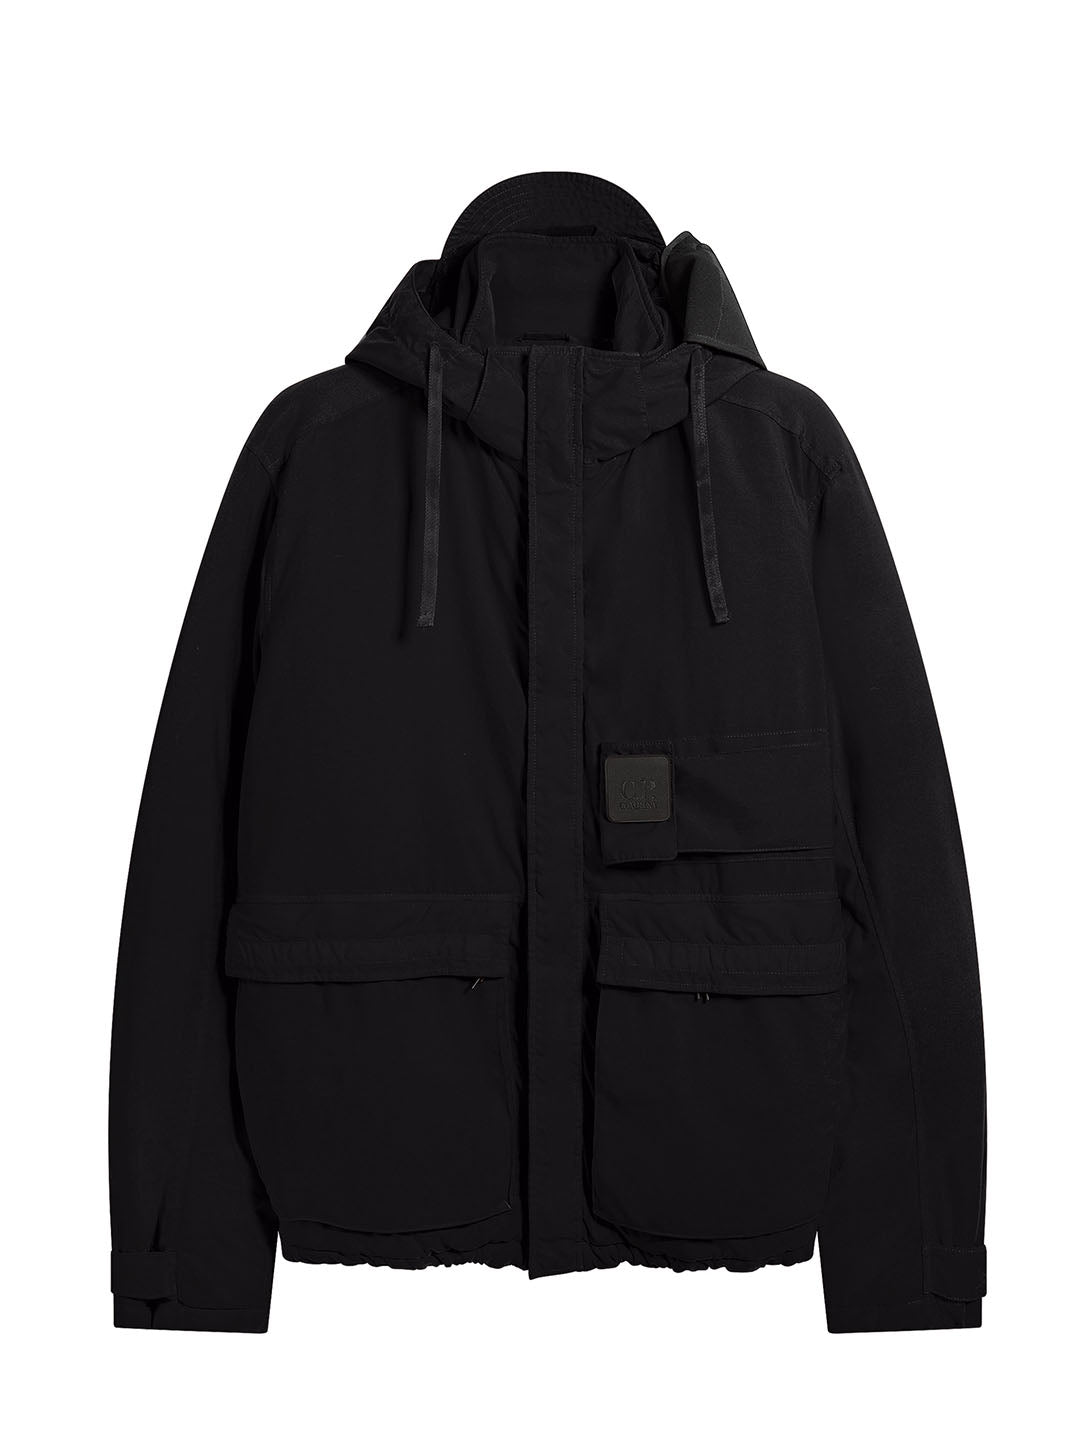 C.P. Company | Taylon P Urban Protection Series Medium Jacket in Black